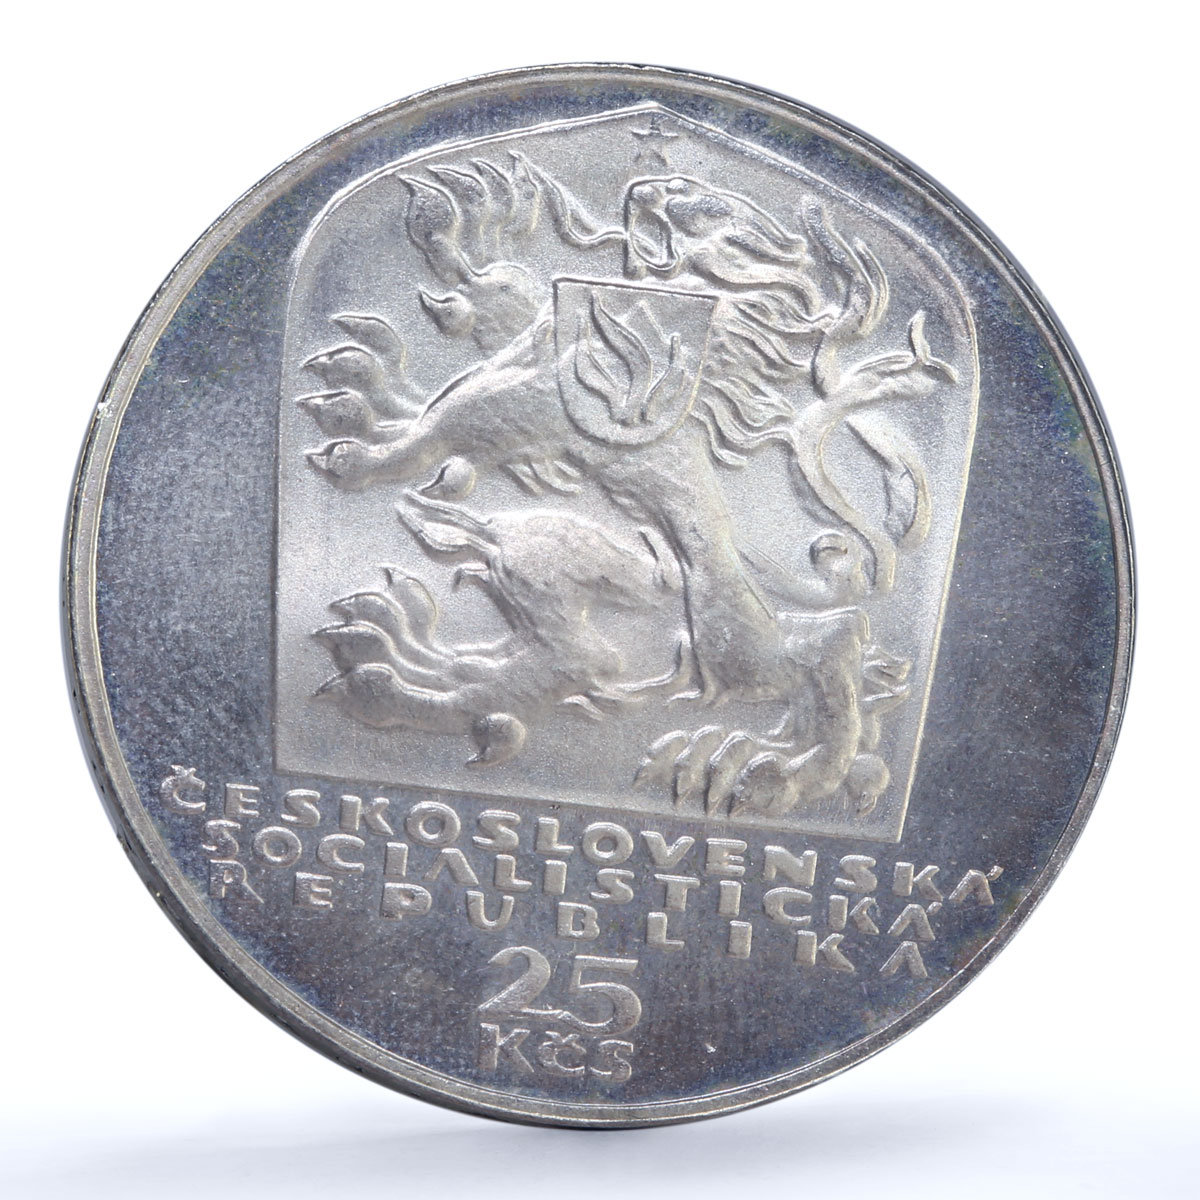 Czechoslovakia 25 korun 25th Anniversary of Slovak Uprising proof Ag coin 1969